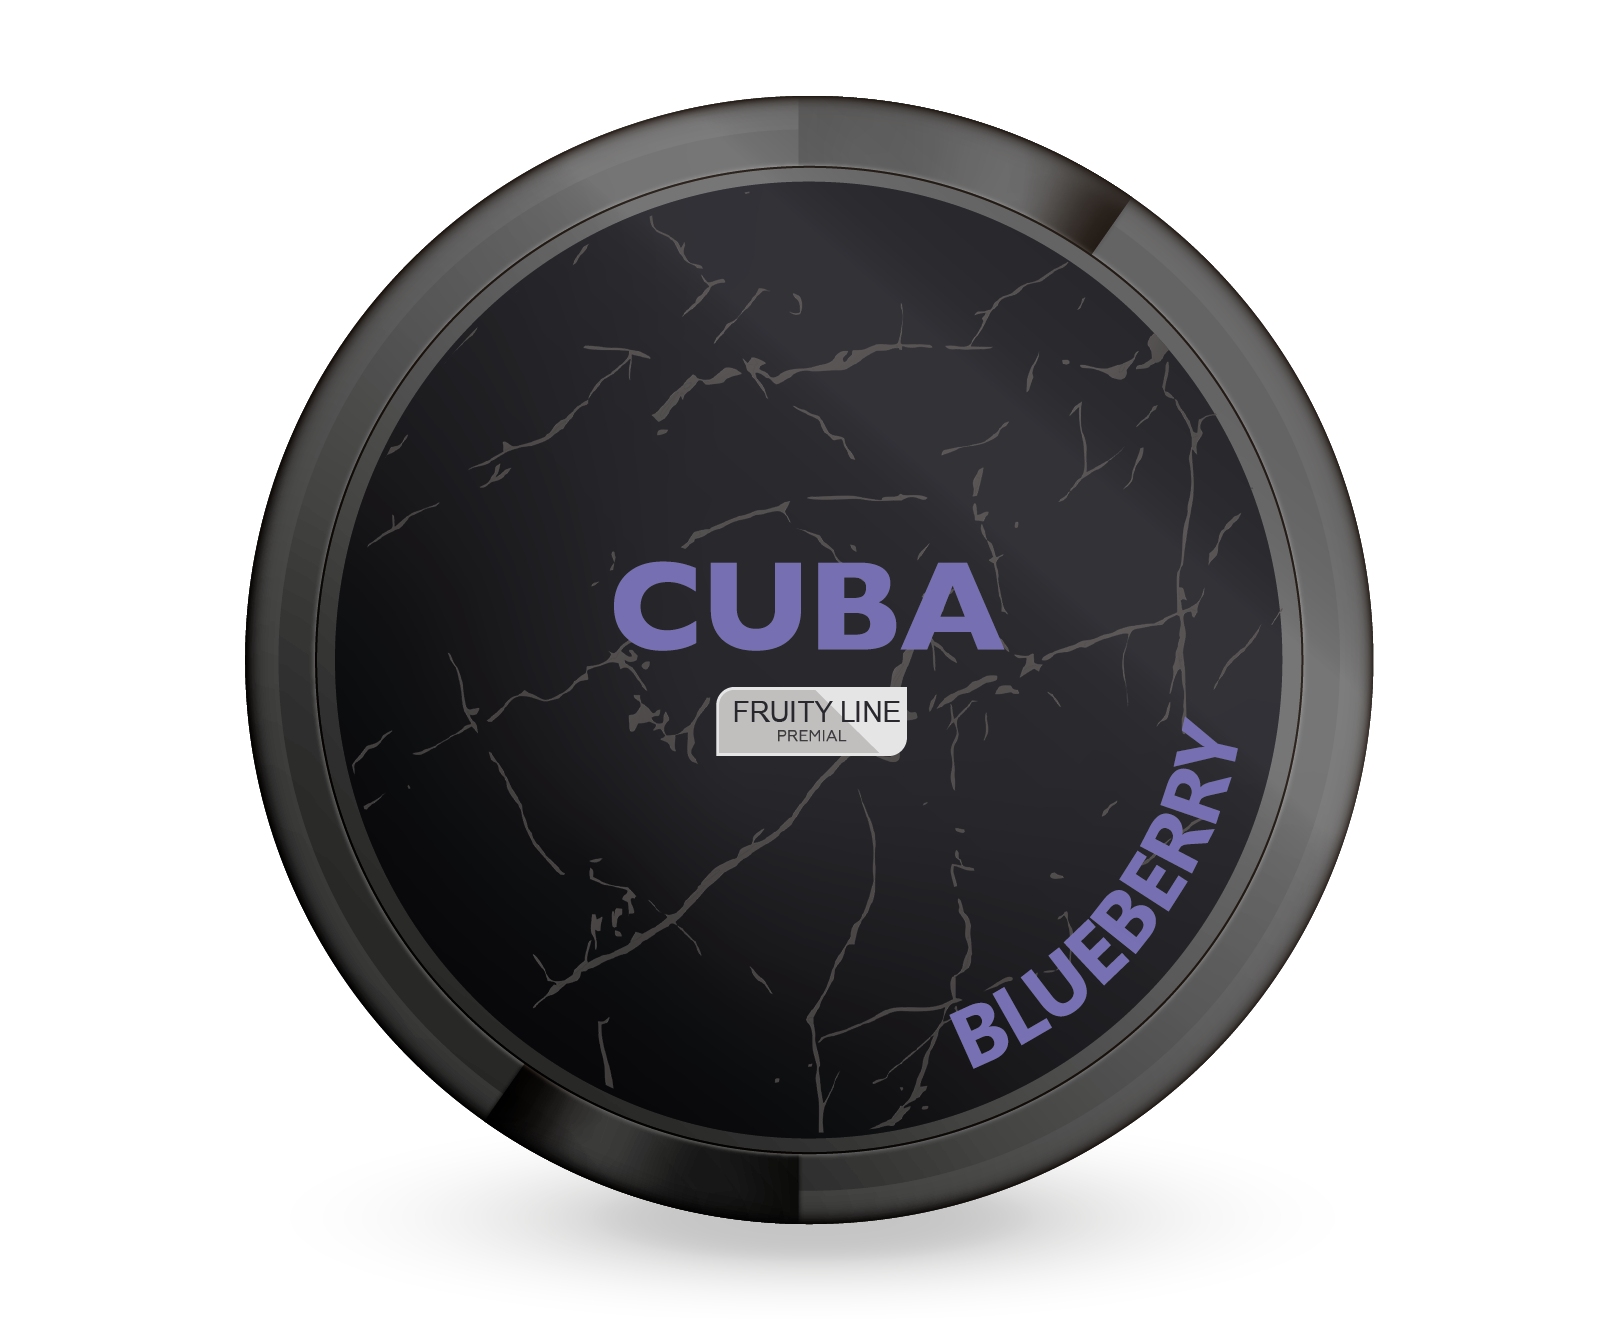 Cuba Black Blueberry Top